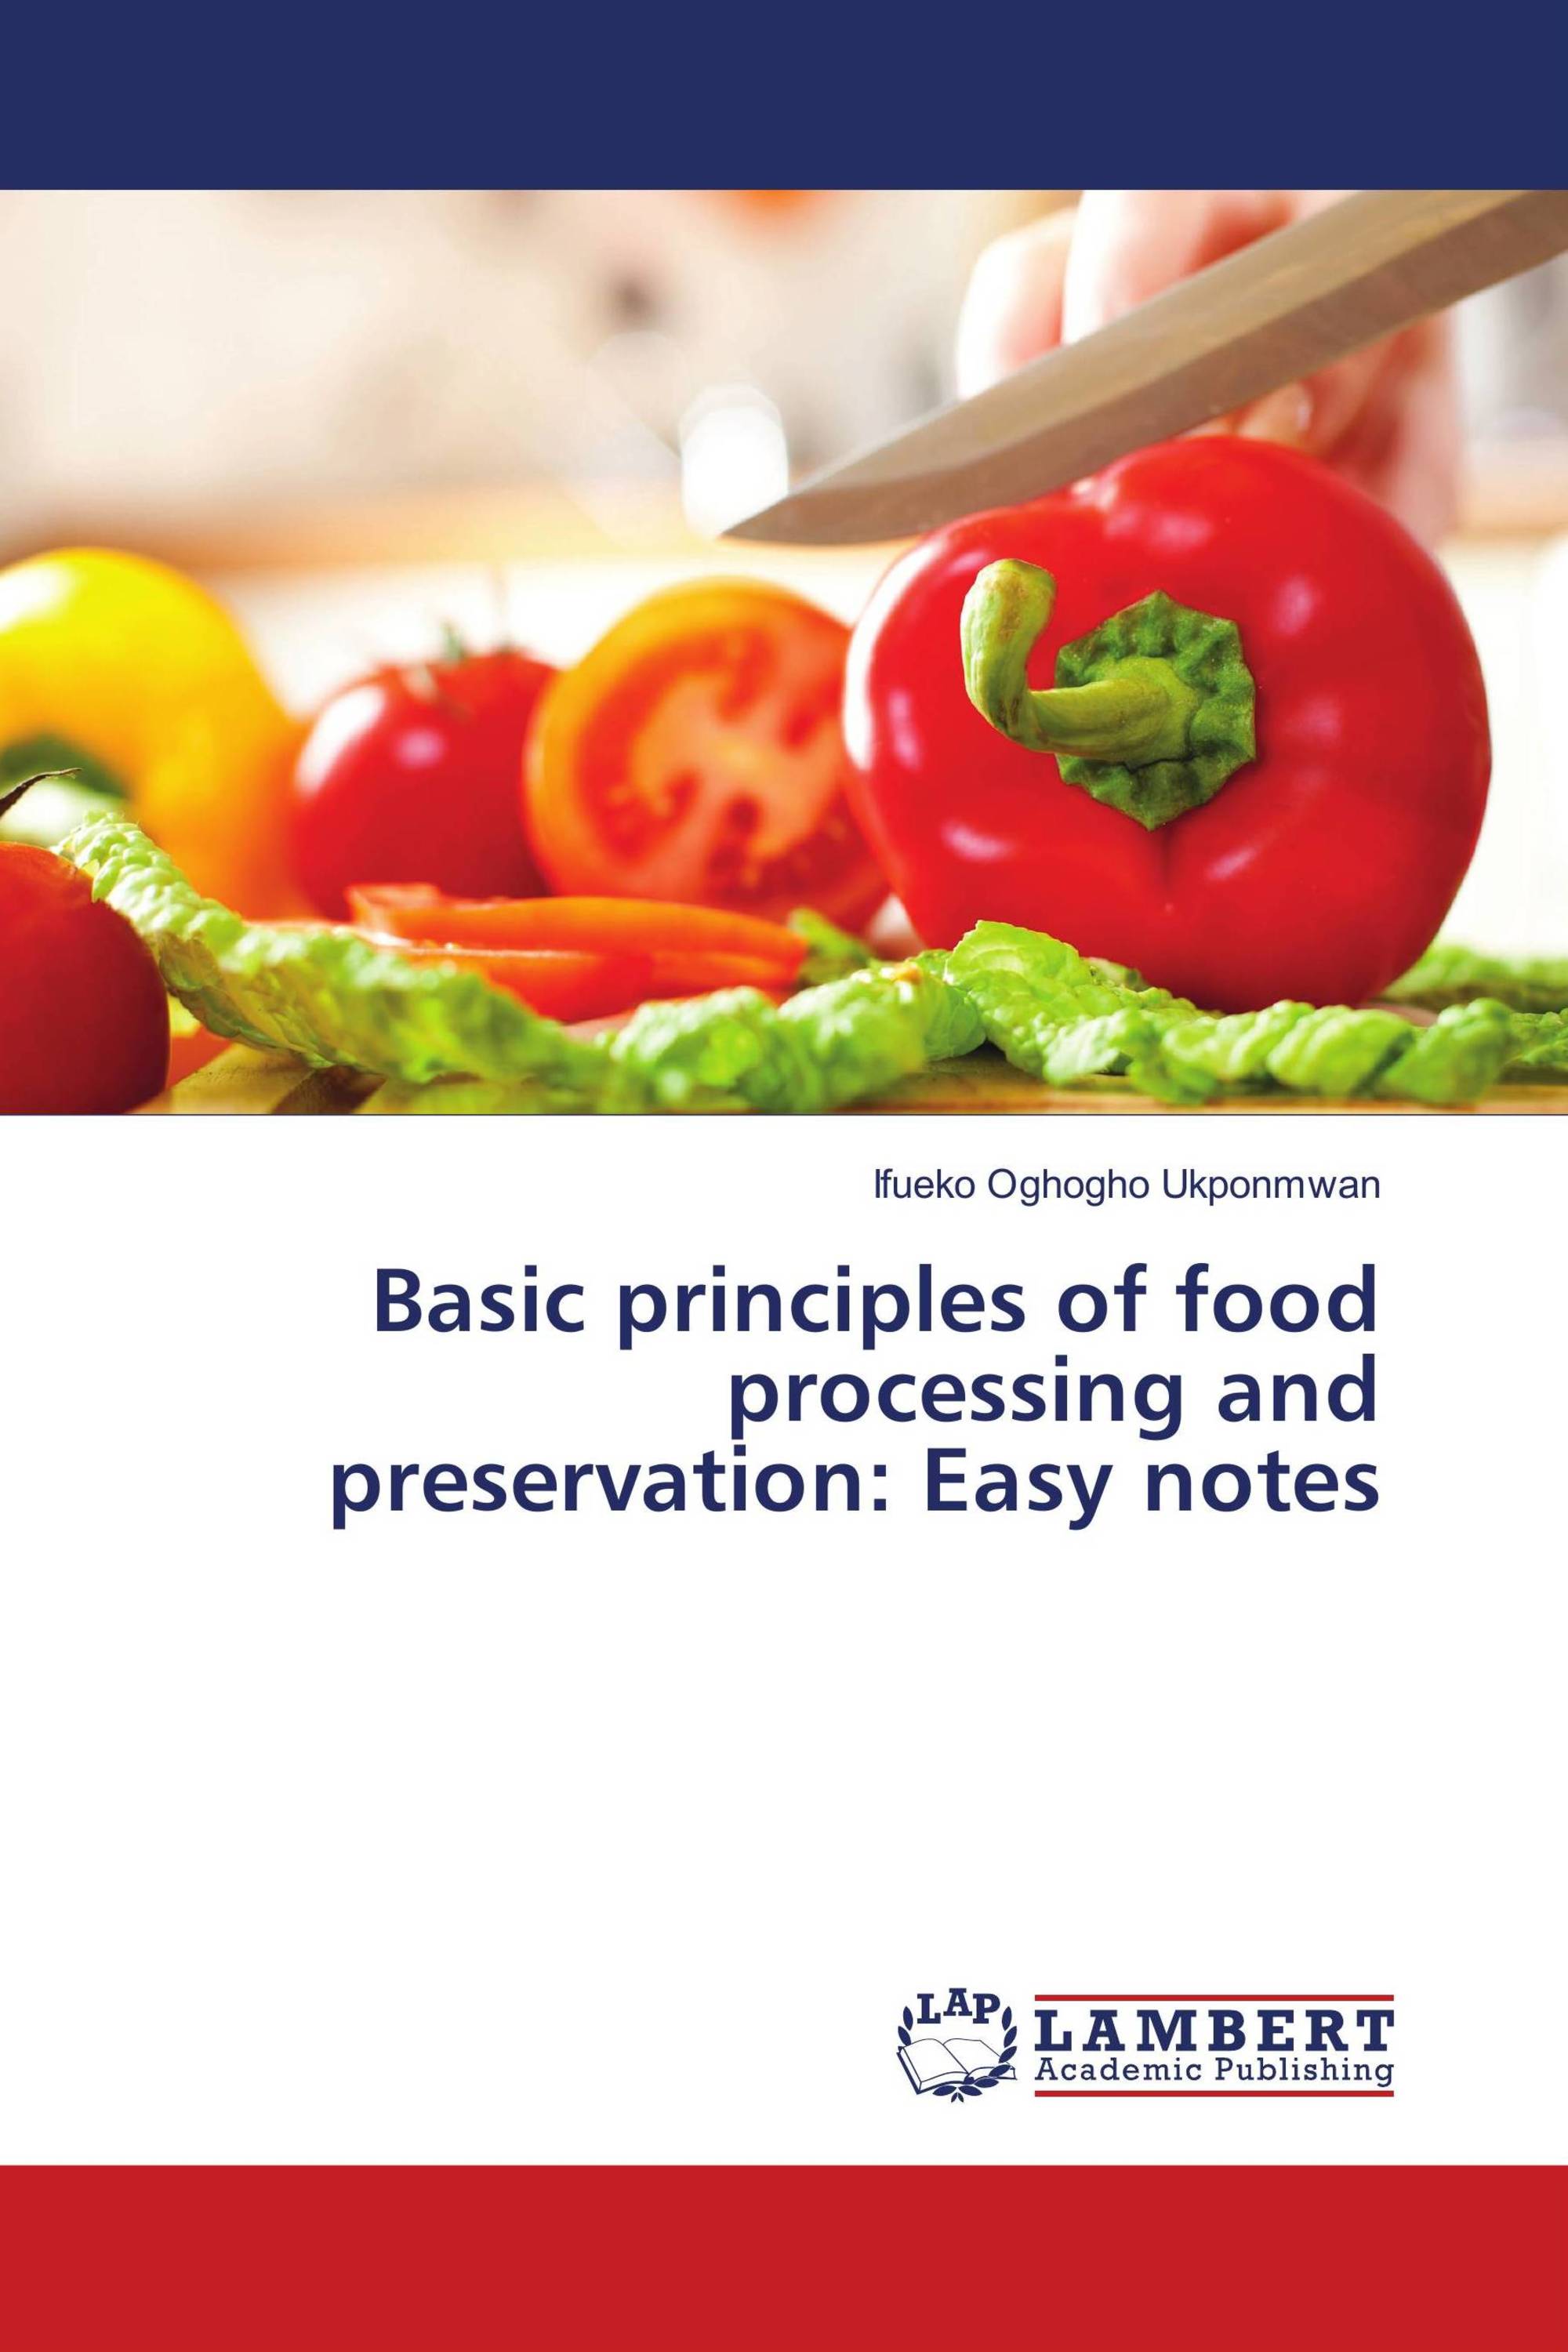 short essay about food preservation